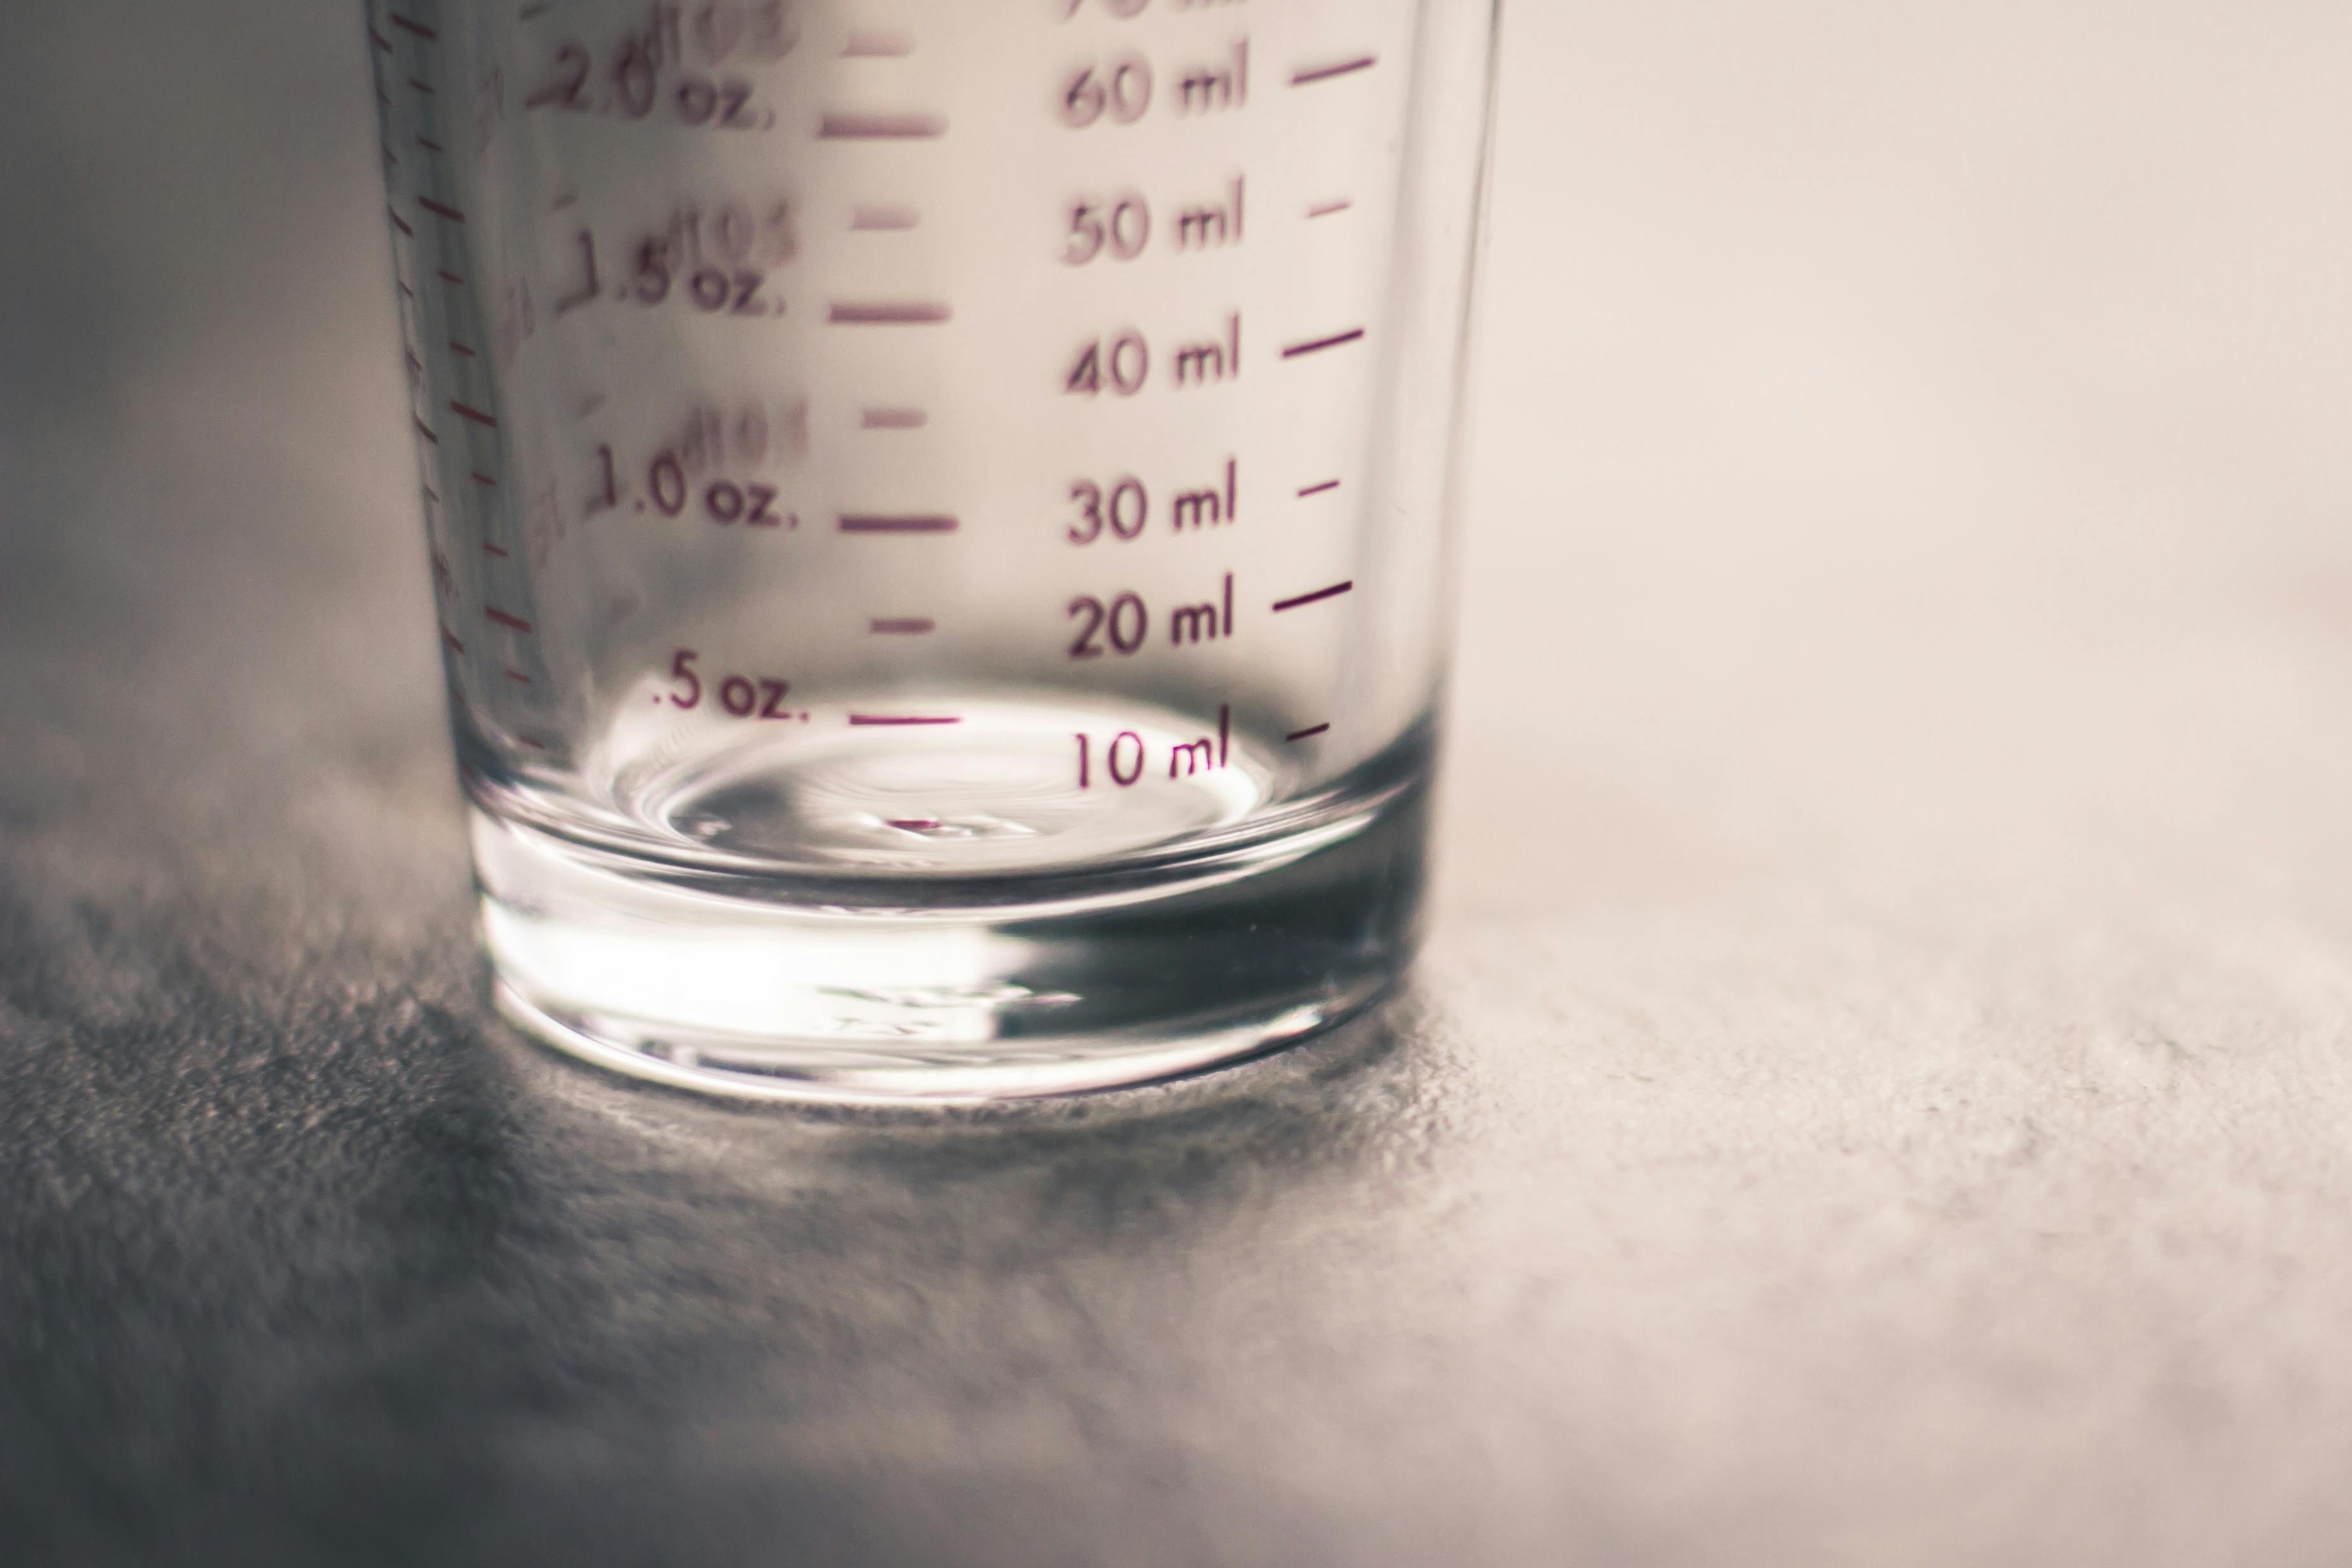 Part of a glass measuring jug | Source: Pexels